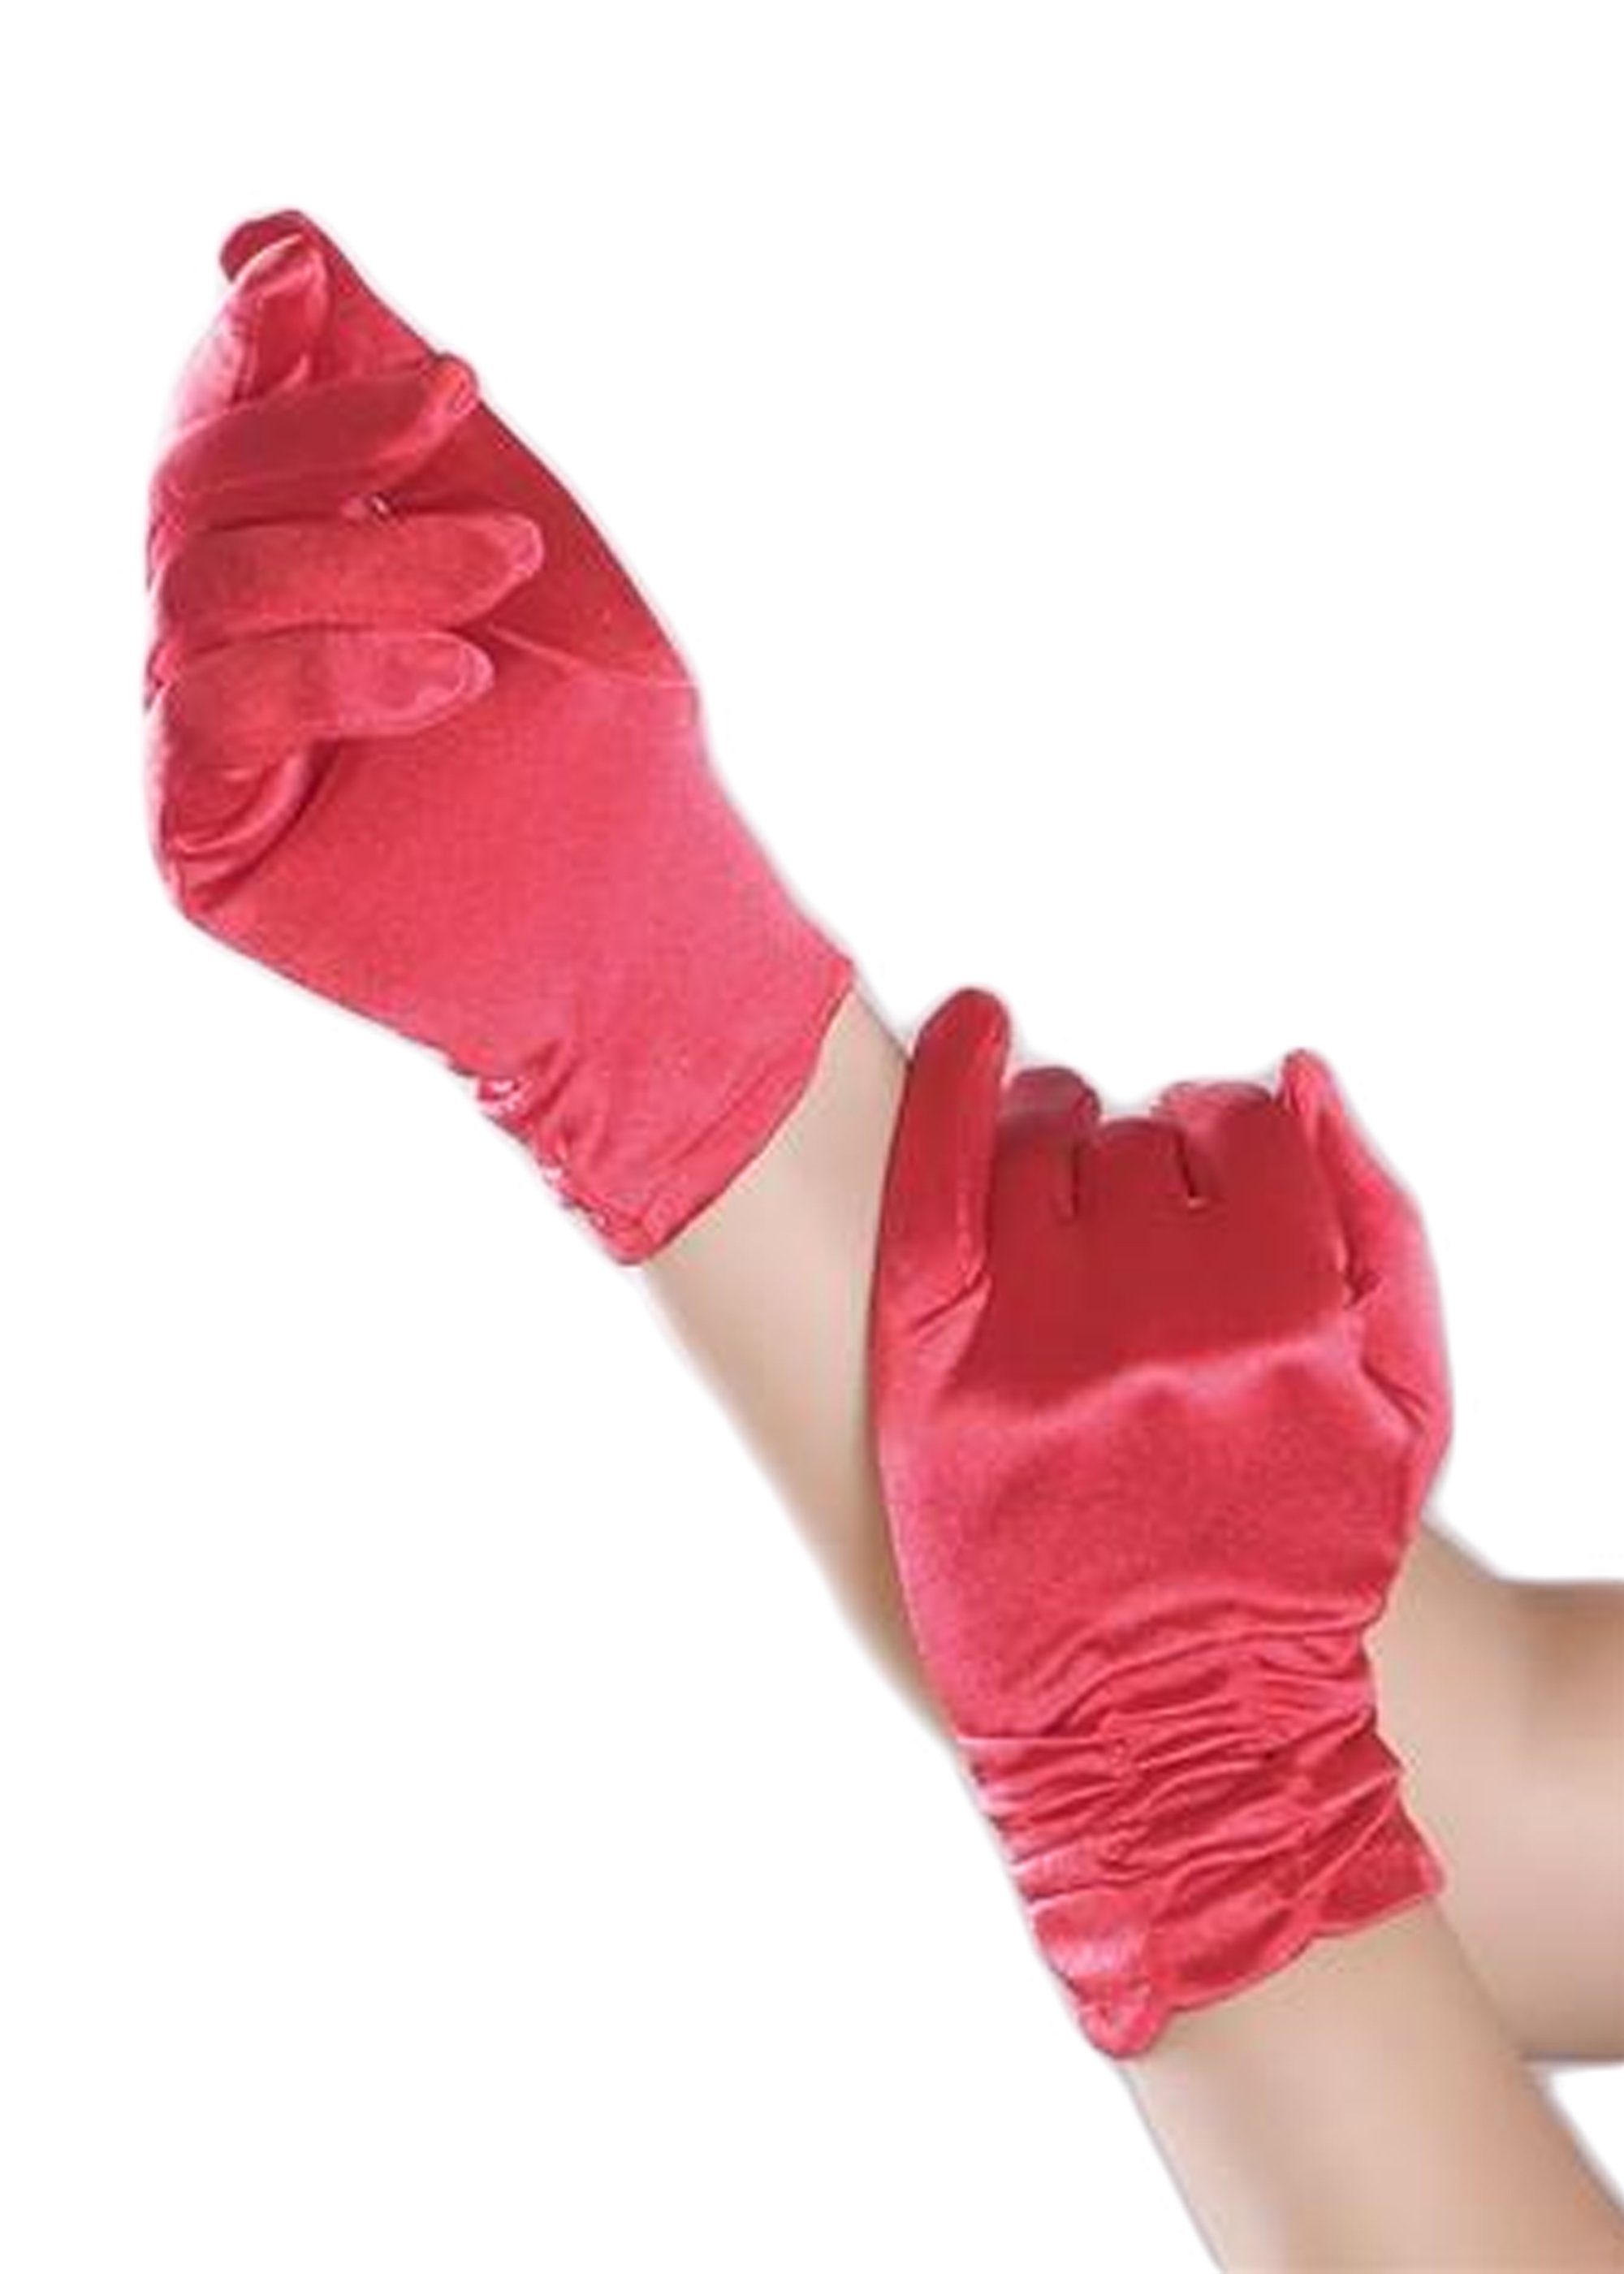 Family Trends Abendhandschuhe Handschuhe Satin-Look Raffung Damen kurz mit im dehnbar Satin rot